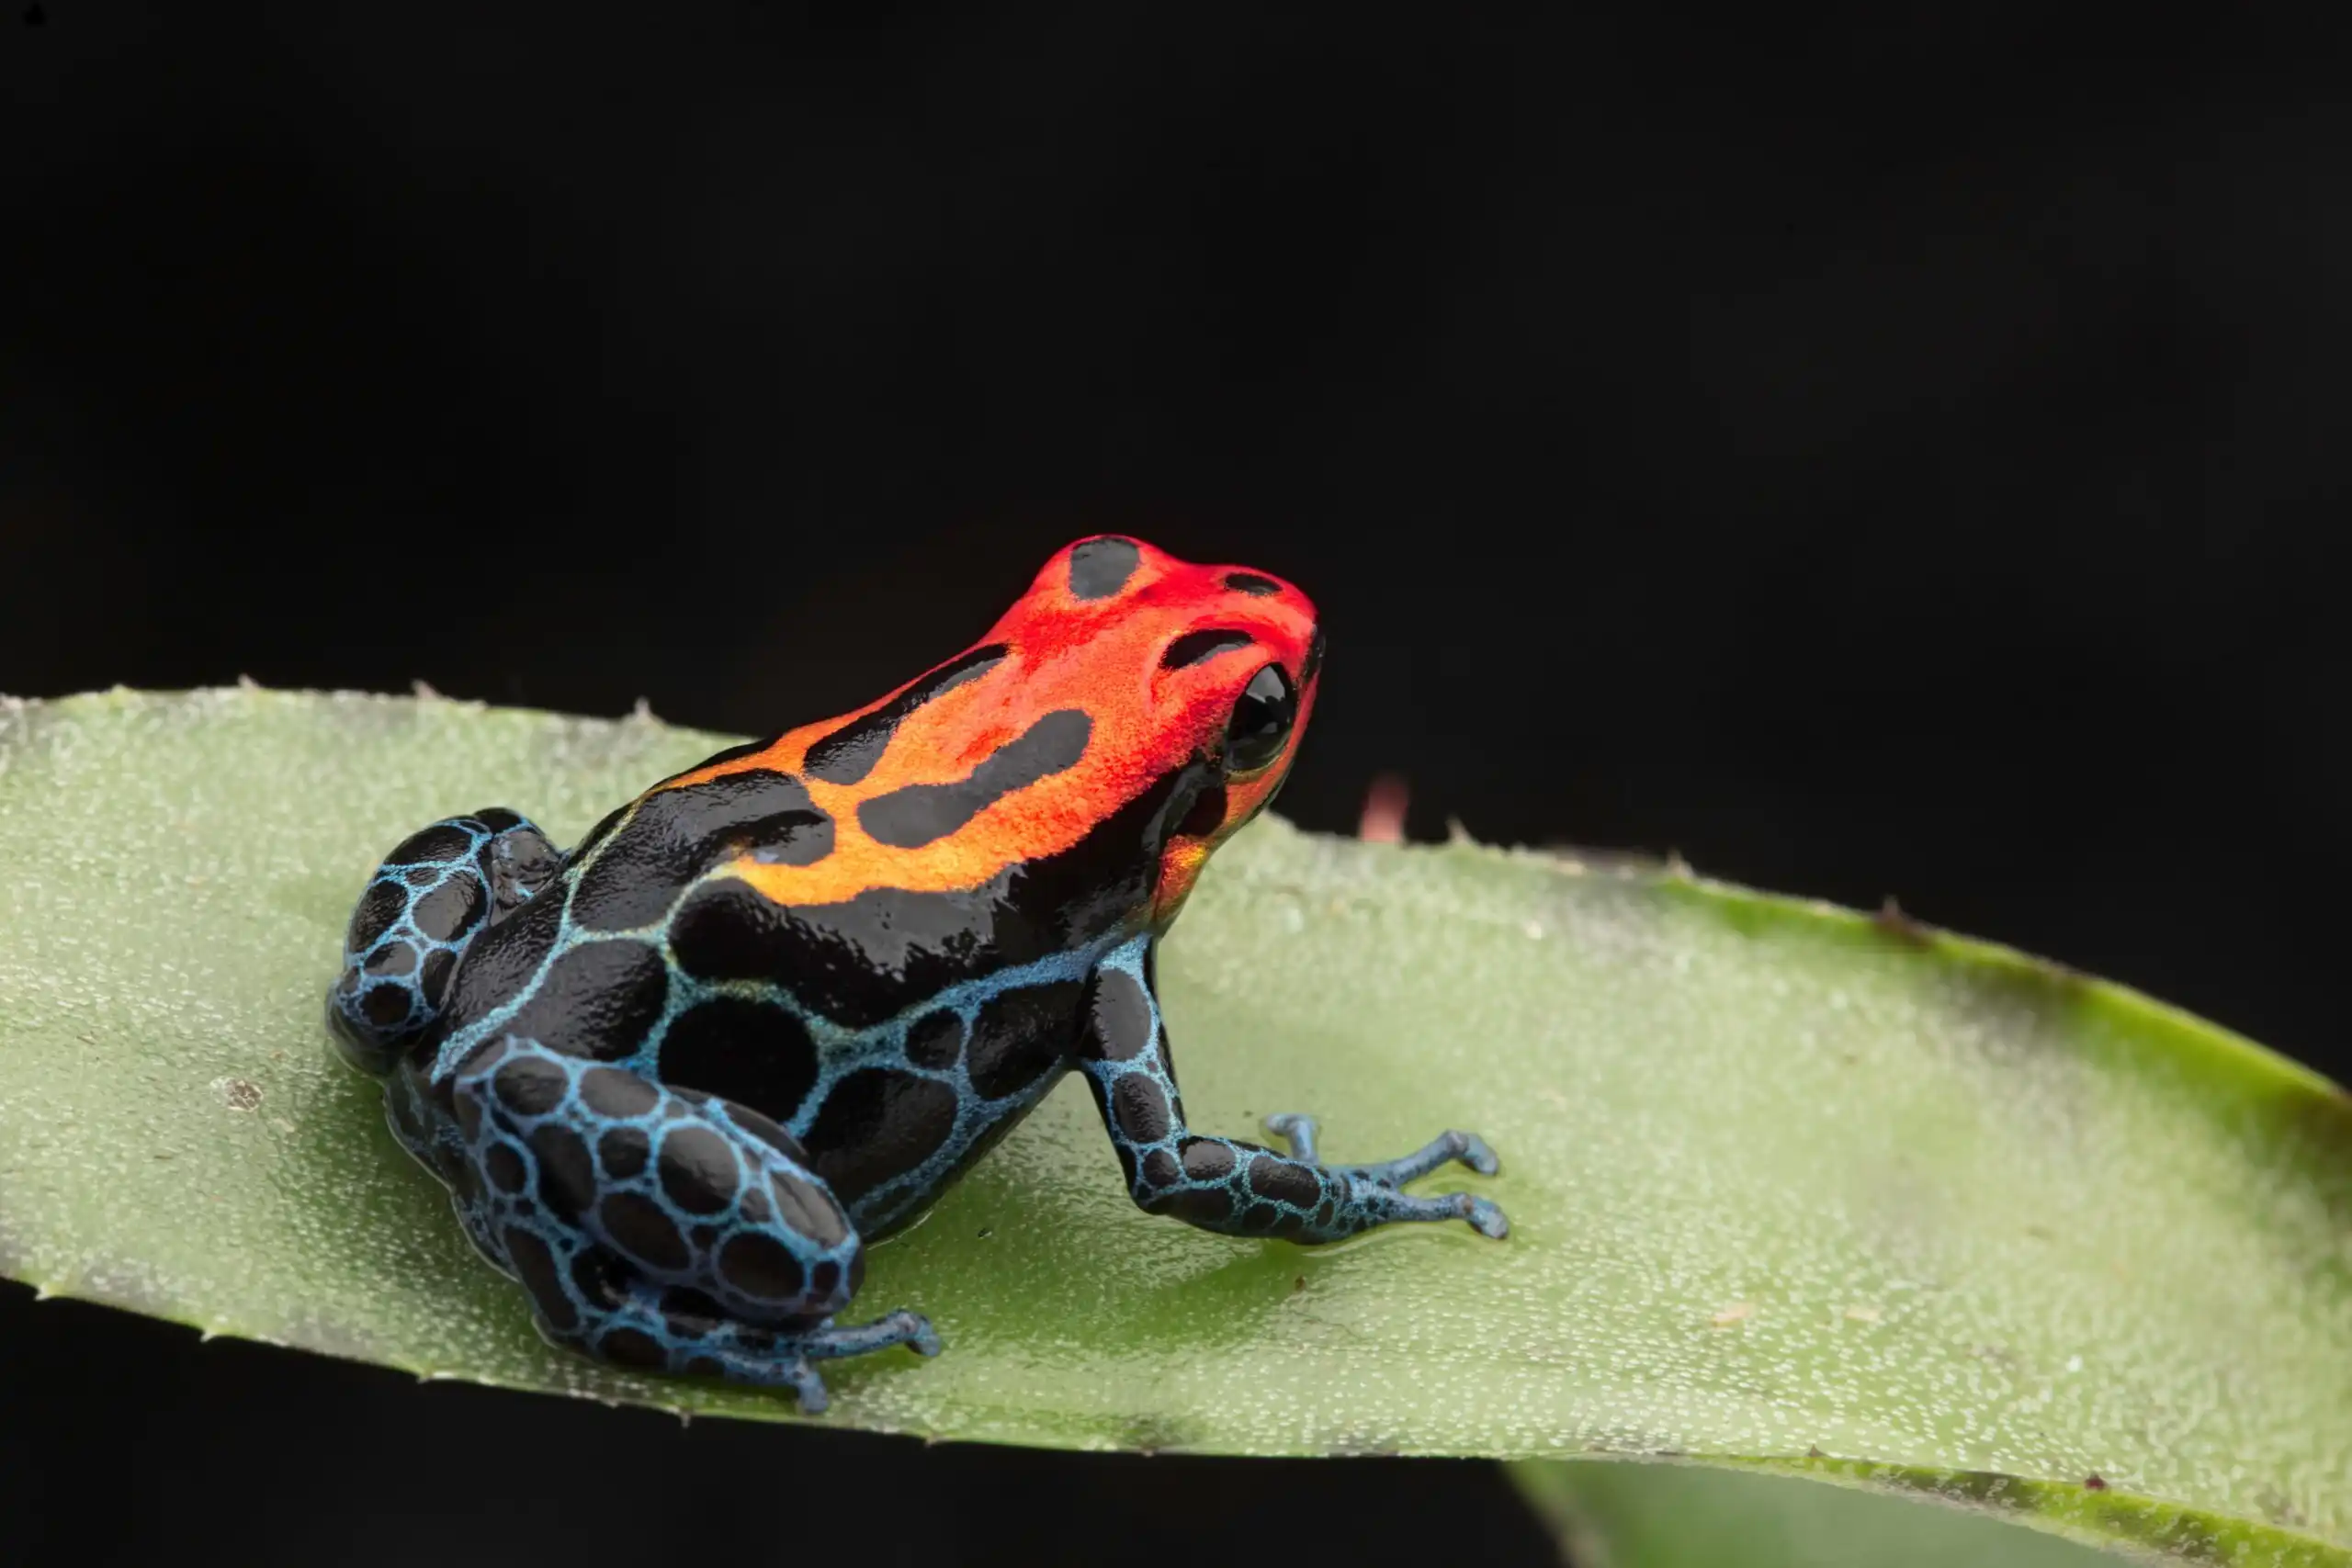 South American poison dark frog